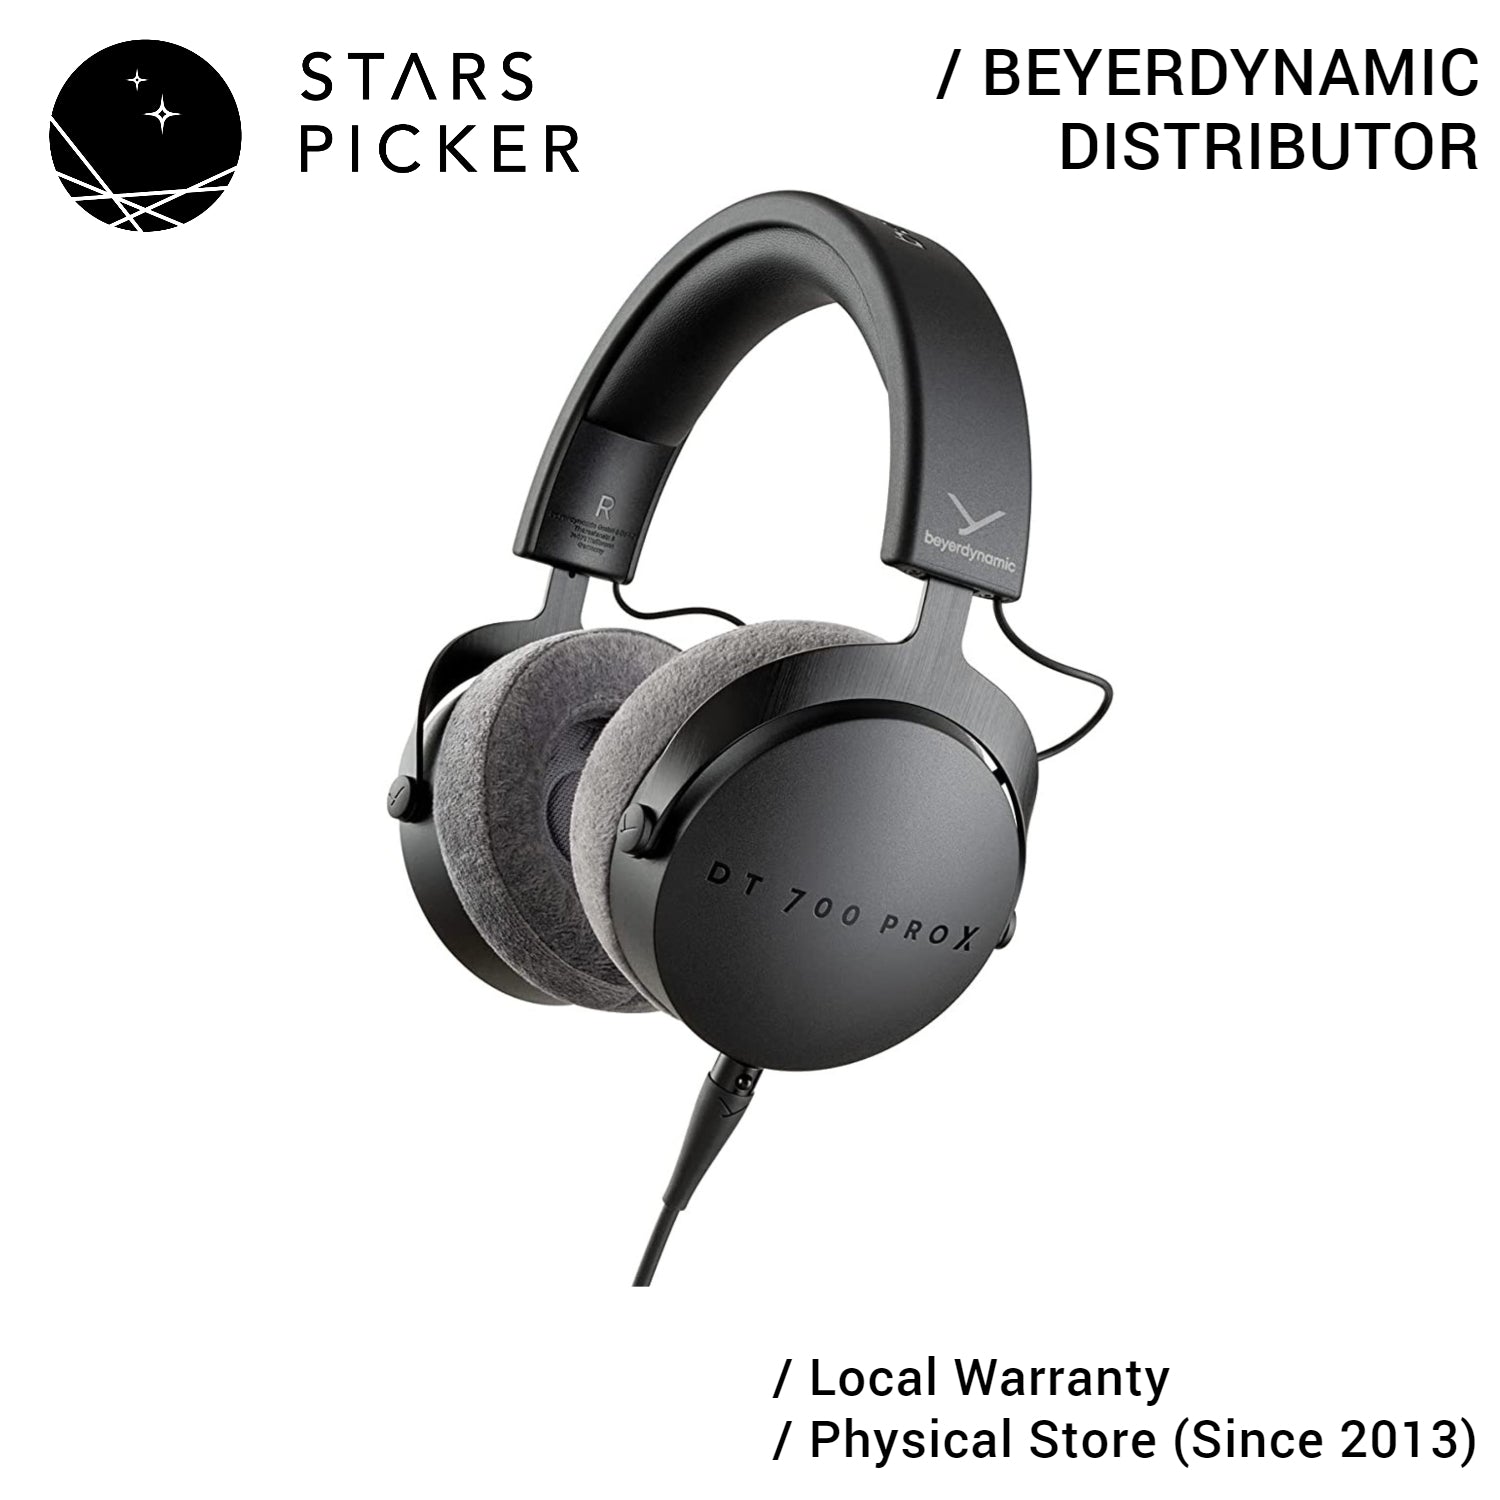 Beyerdynamic DT 700 PRO X (48 ohms) DT700 PRO X Closed Back Studio Headphones for Recording & Monitoring